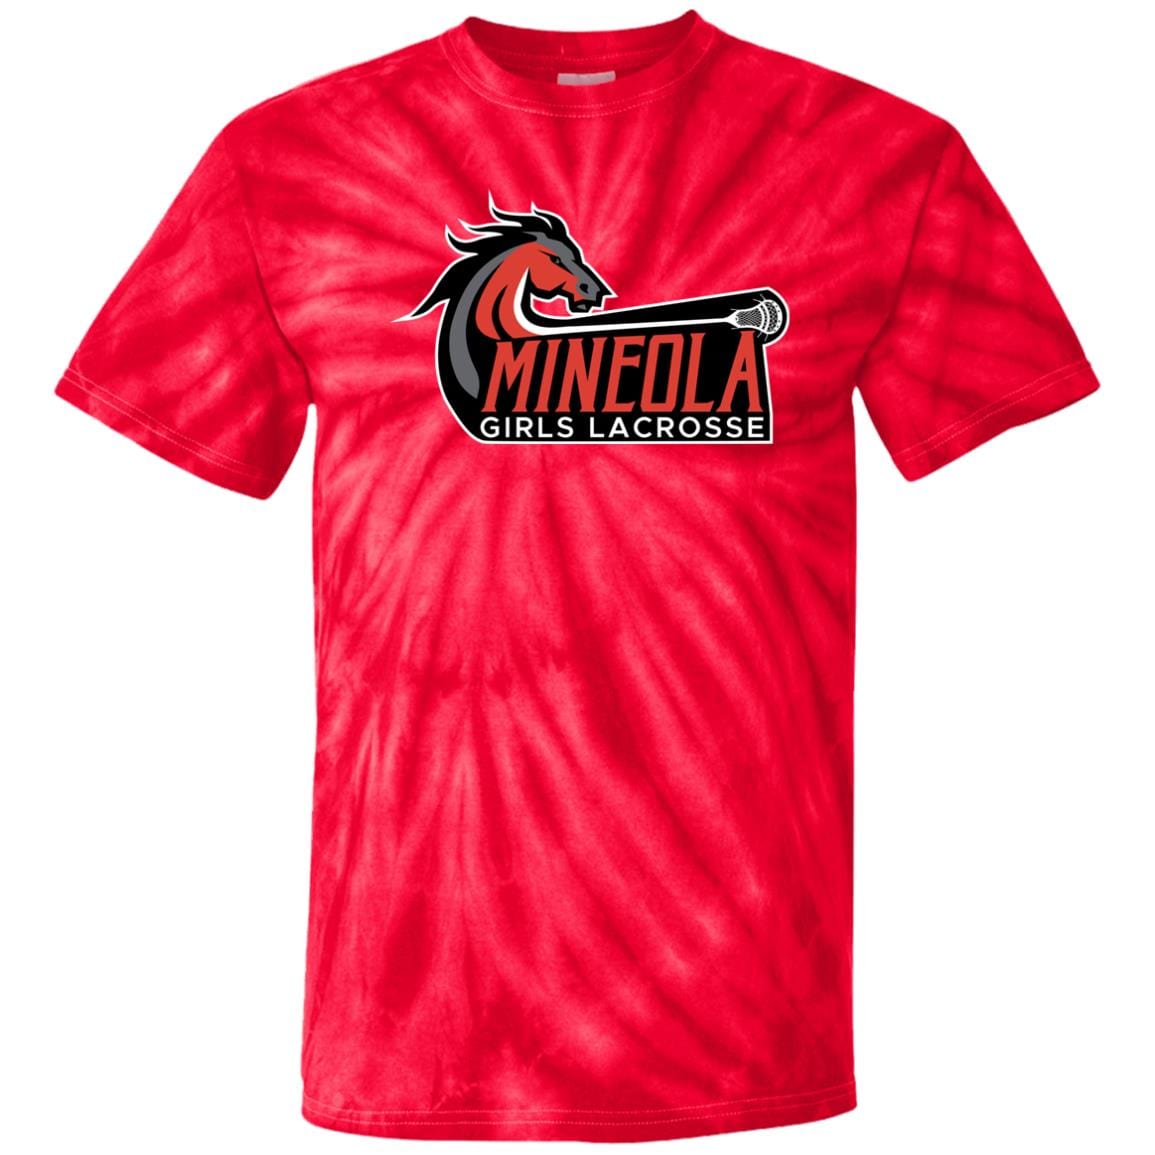 Mineola Girls Lacrosse Adult Cotton Tie Dye T-Shirt Signature Lacrosse